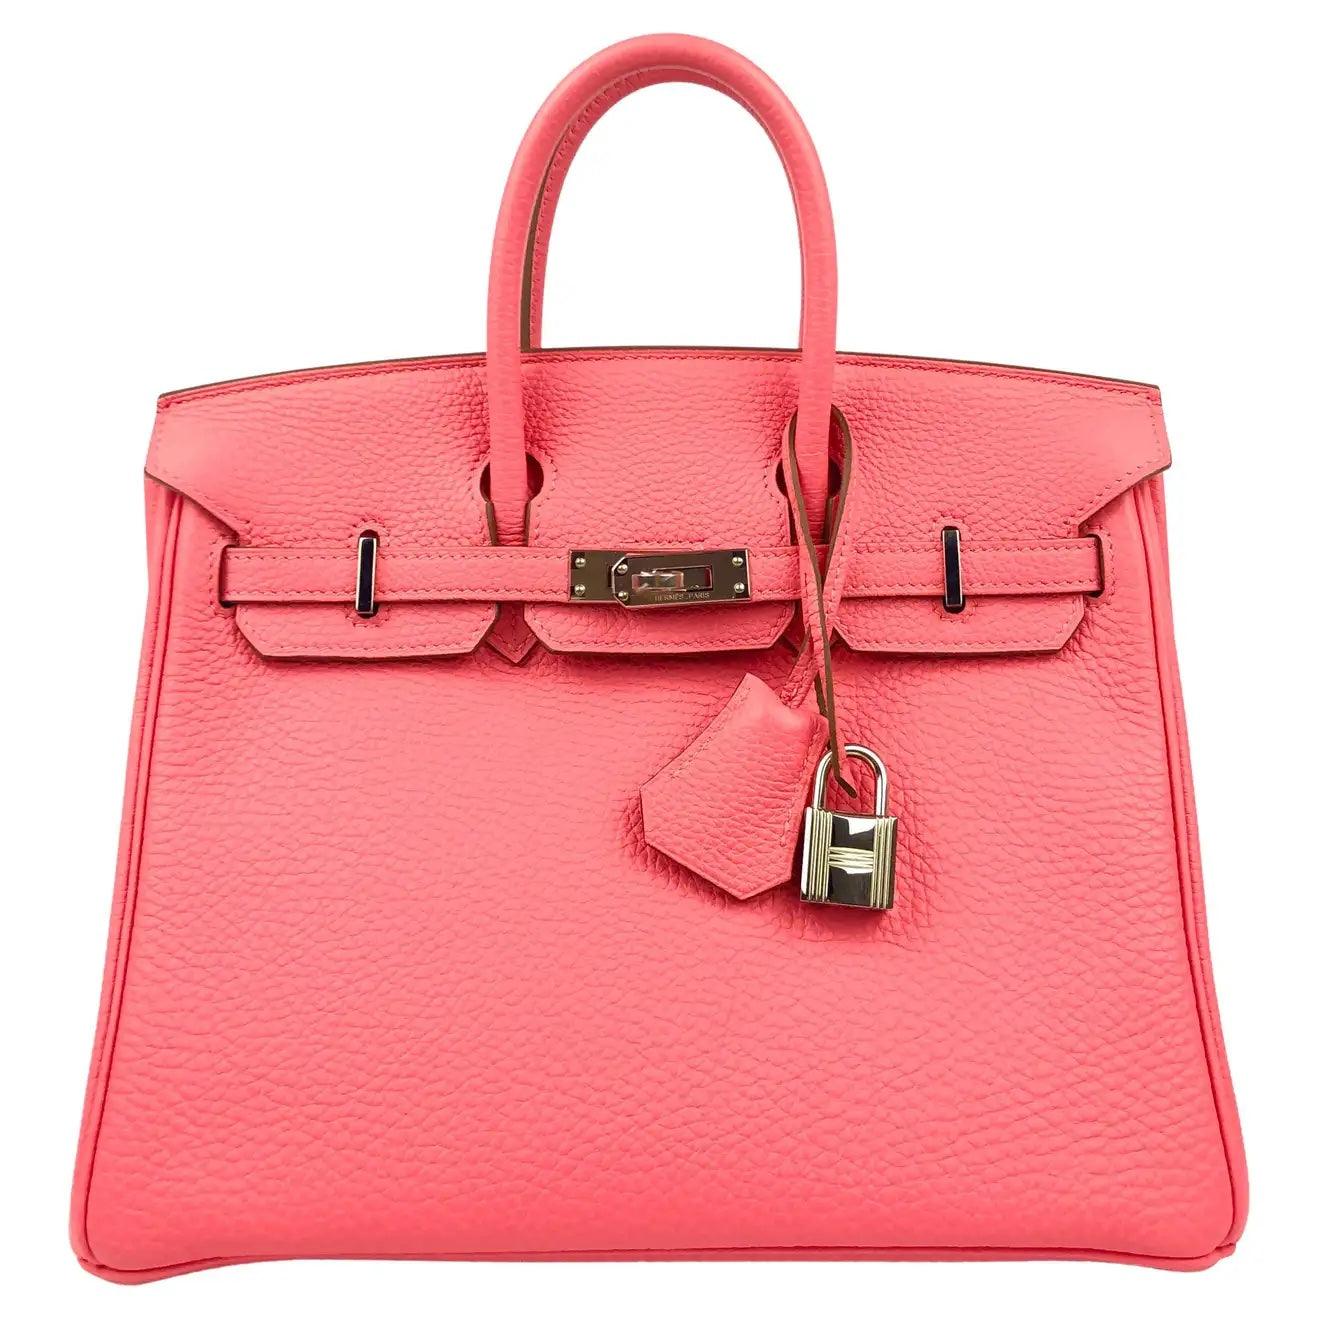 Hermes Hermès Birkin 25 Pink Leather Handbag ()